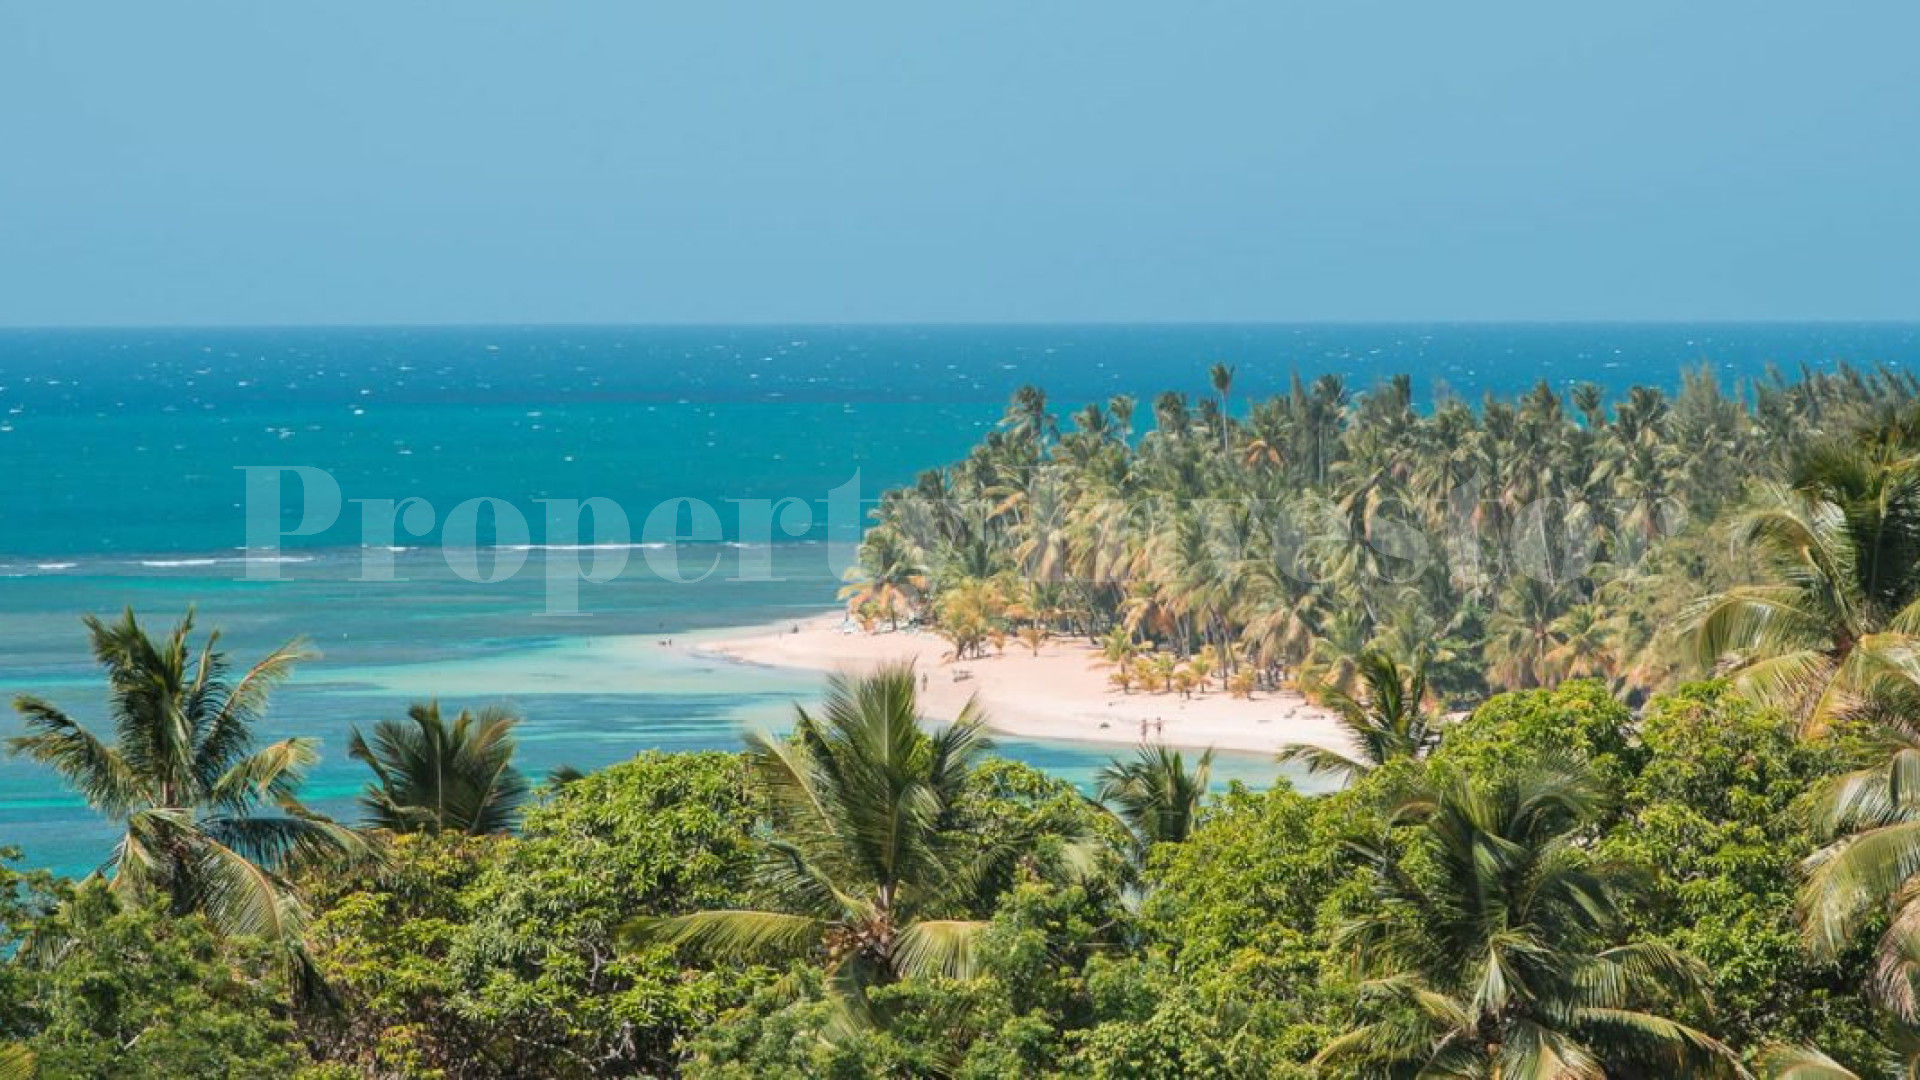 Magnificent 4 Bedroom Luxury Villa with Breathtaking Ocean Views for Sale in Loma Bonita, Dominican Republic